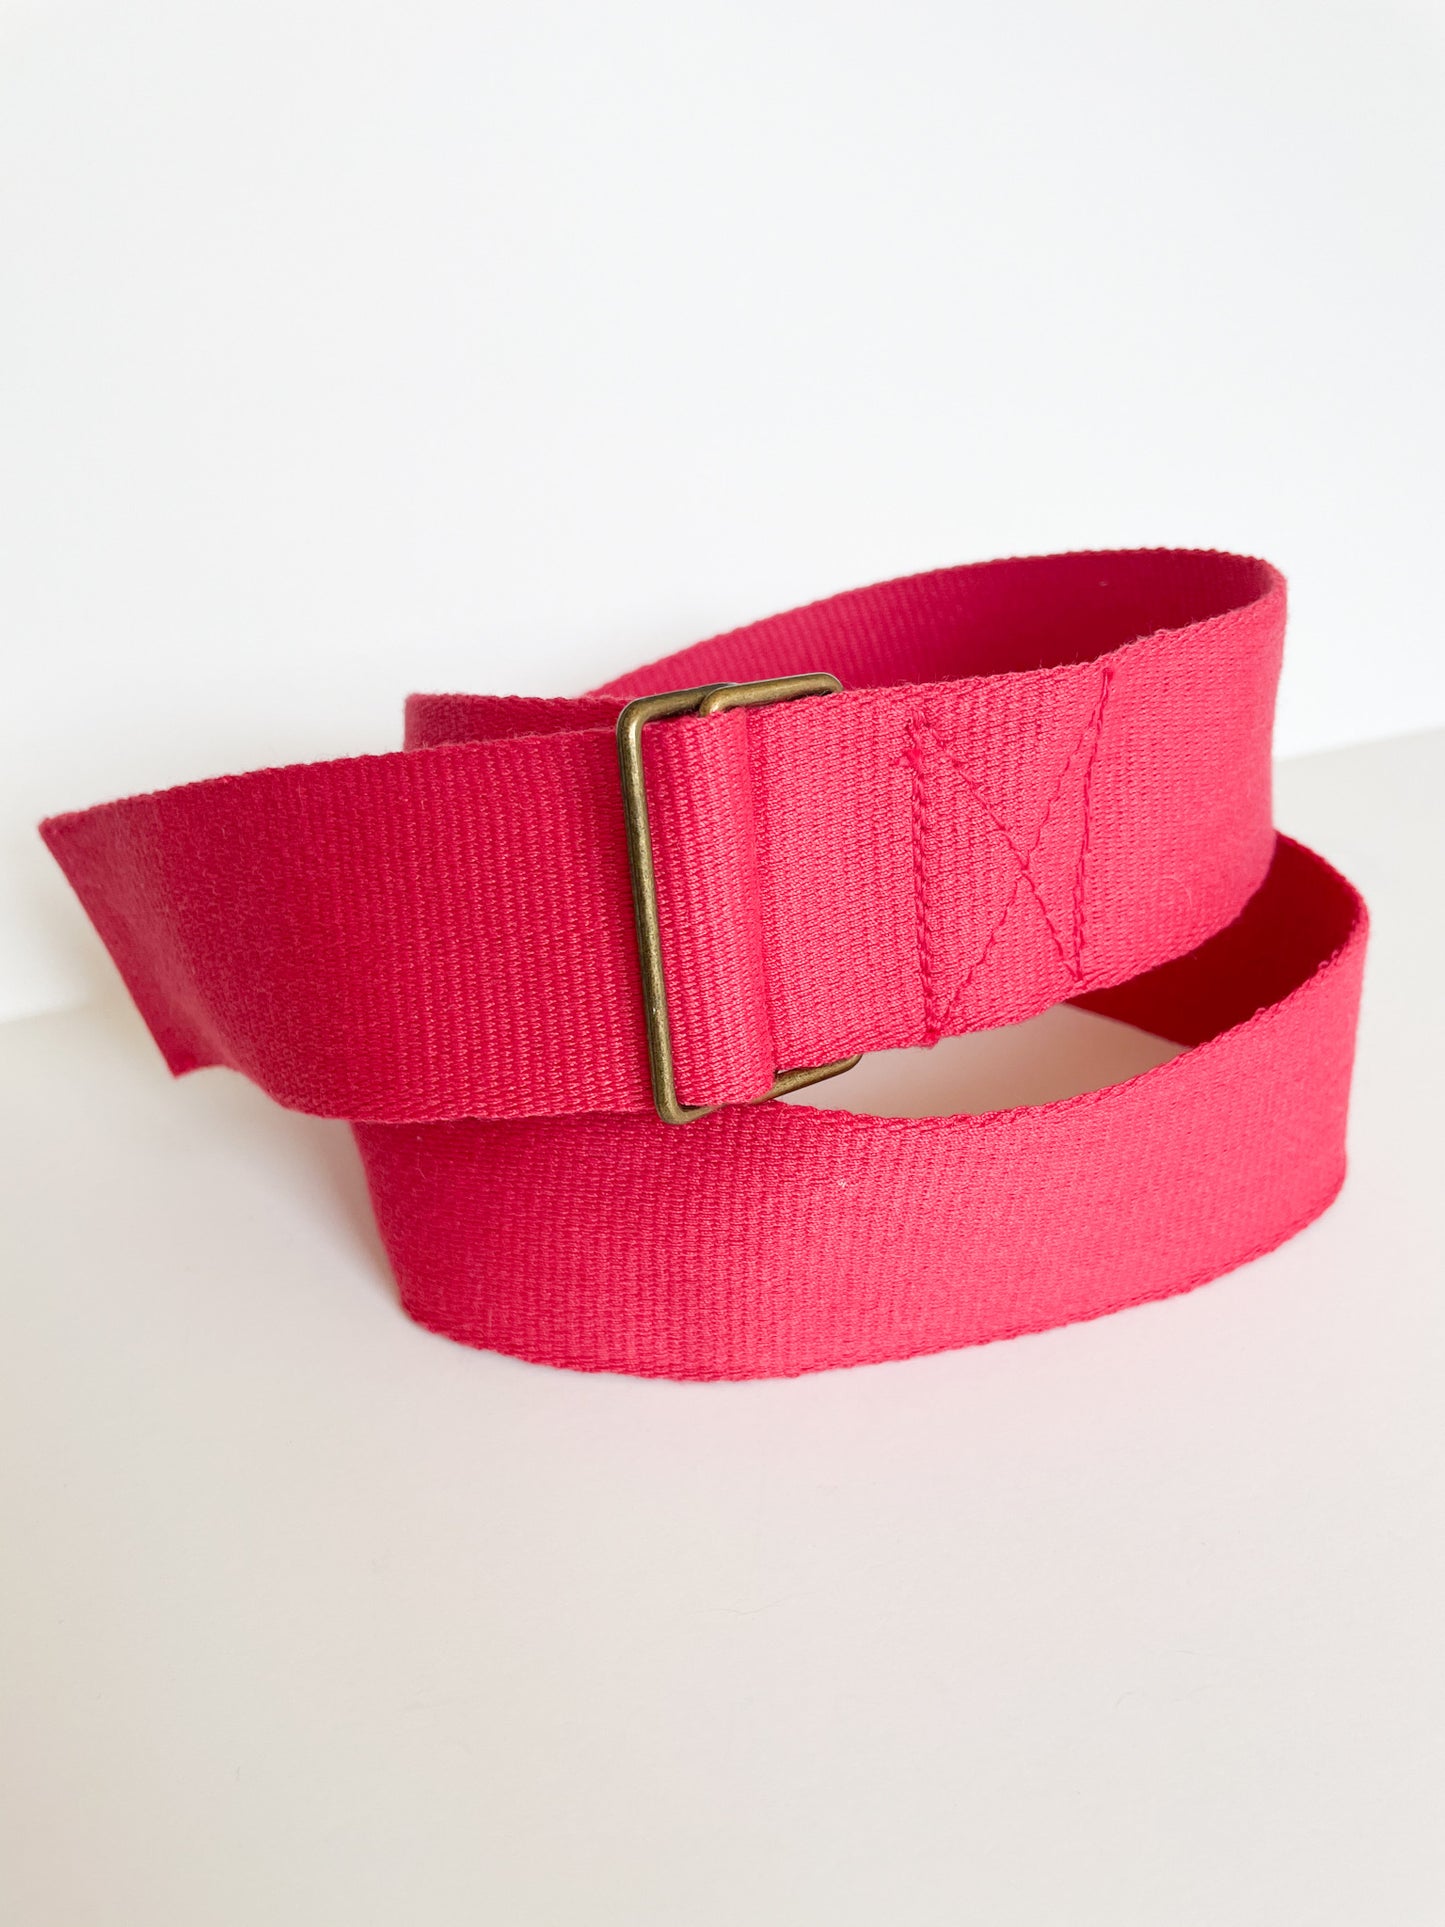 Cherry Red O-Ring Belt - S/M